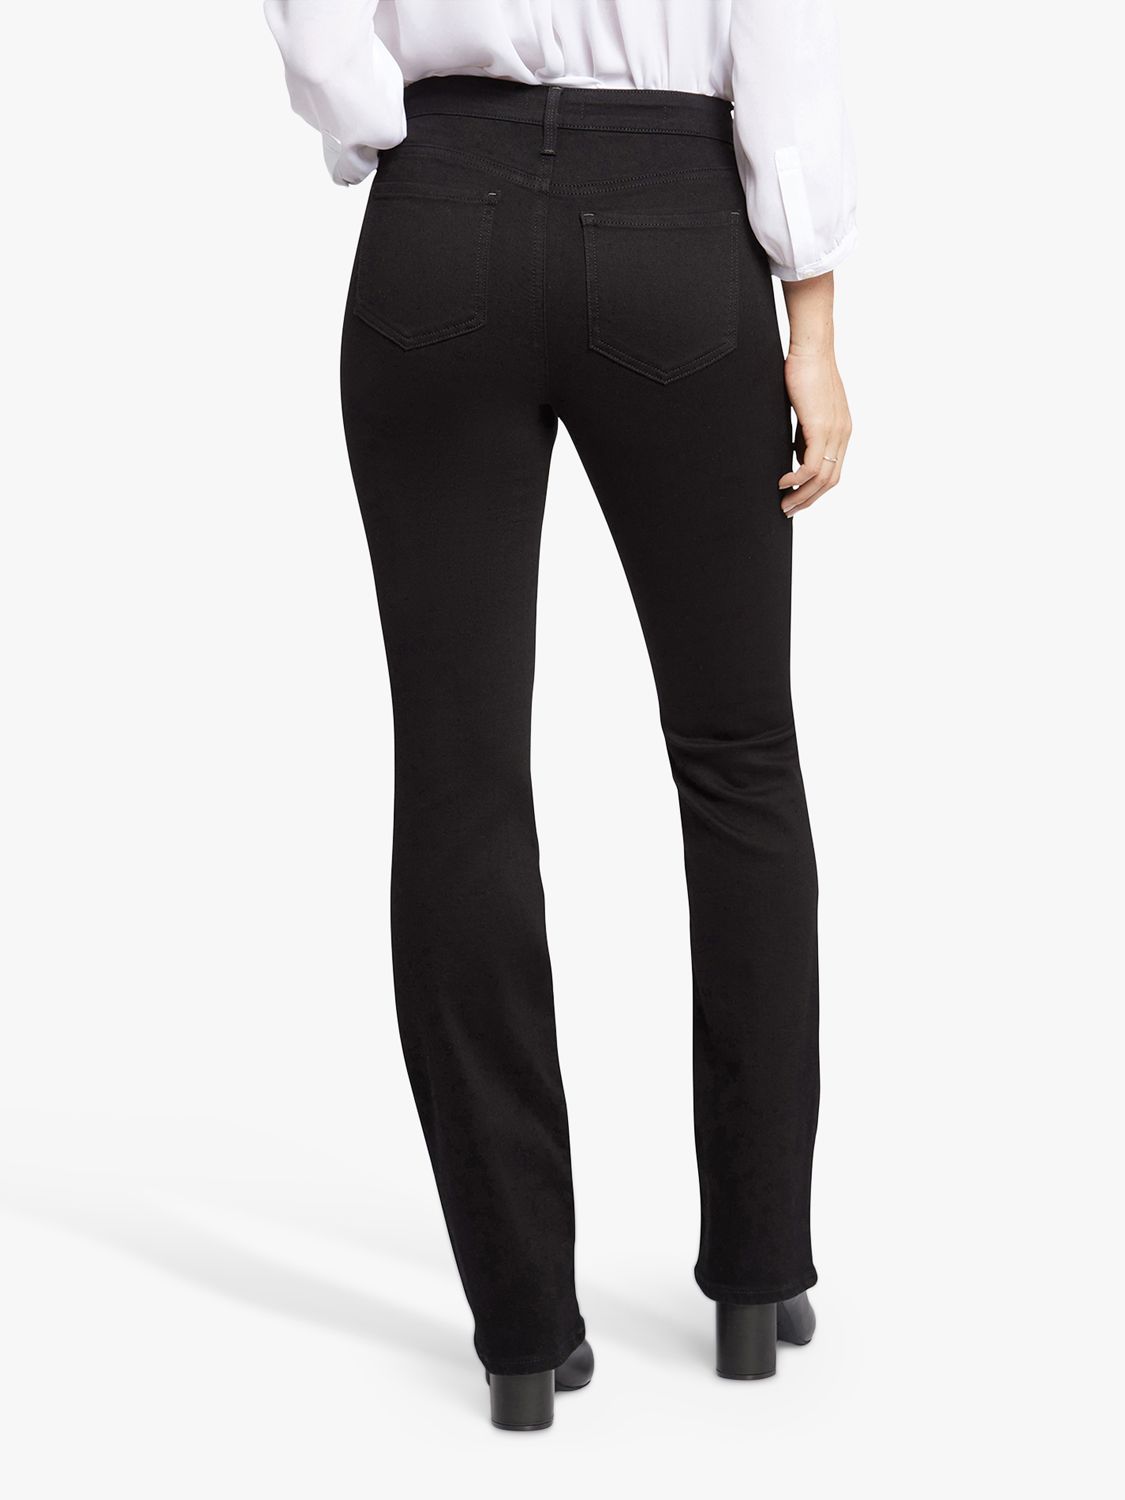 NYDJ Barbara Bootcut Jeans, Black, 22R